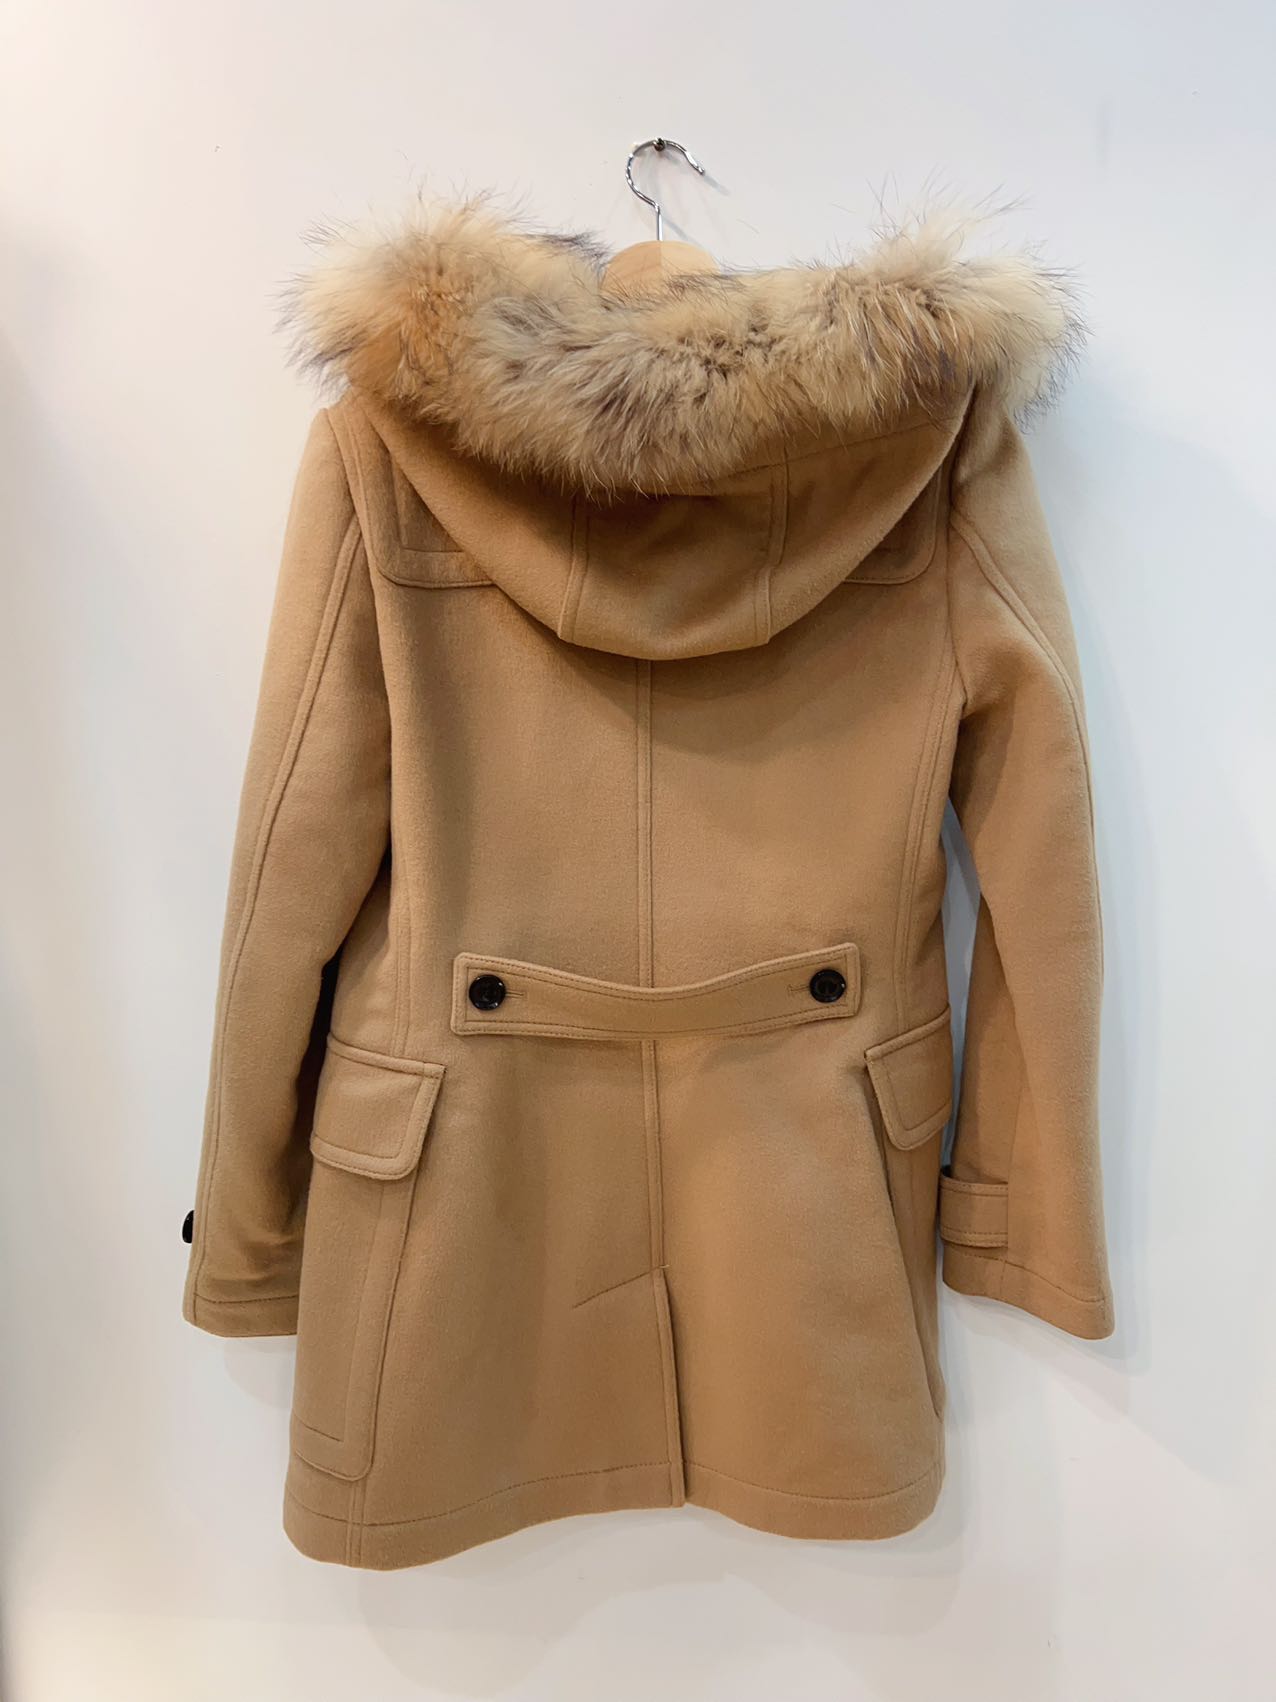 Burberry Fur Jacket Size6